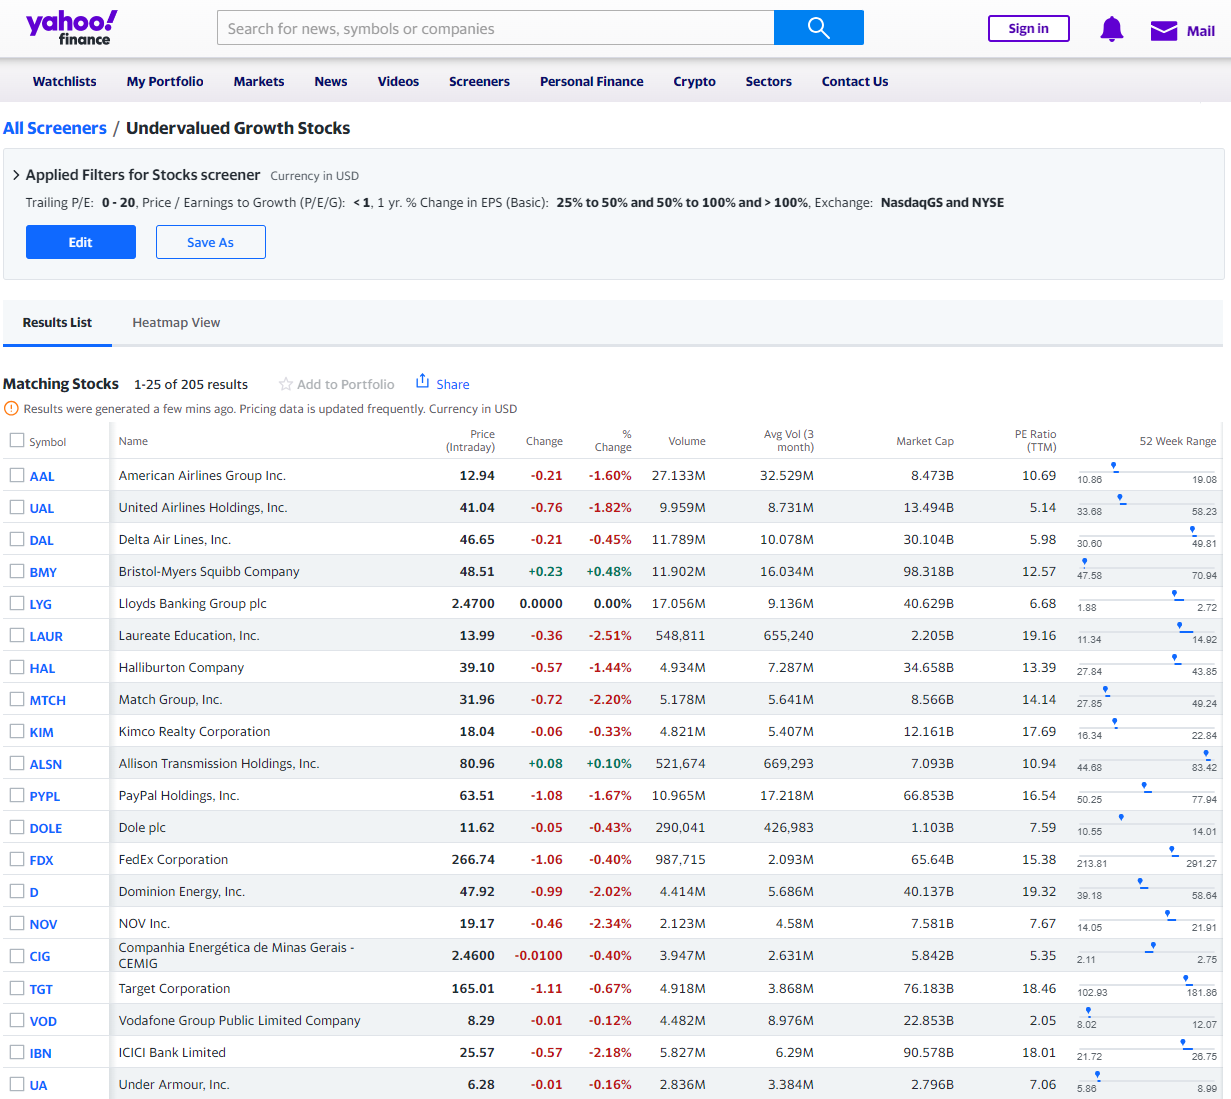 The Yahoo! Finance Undervalued Growth Stock List